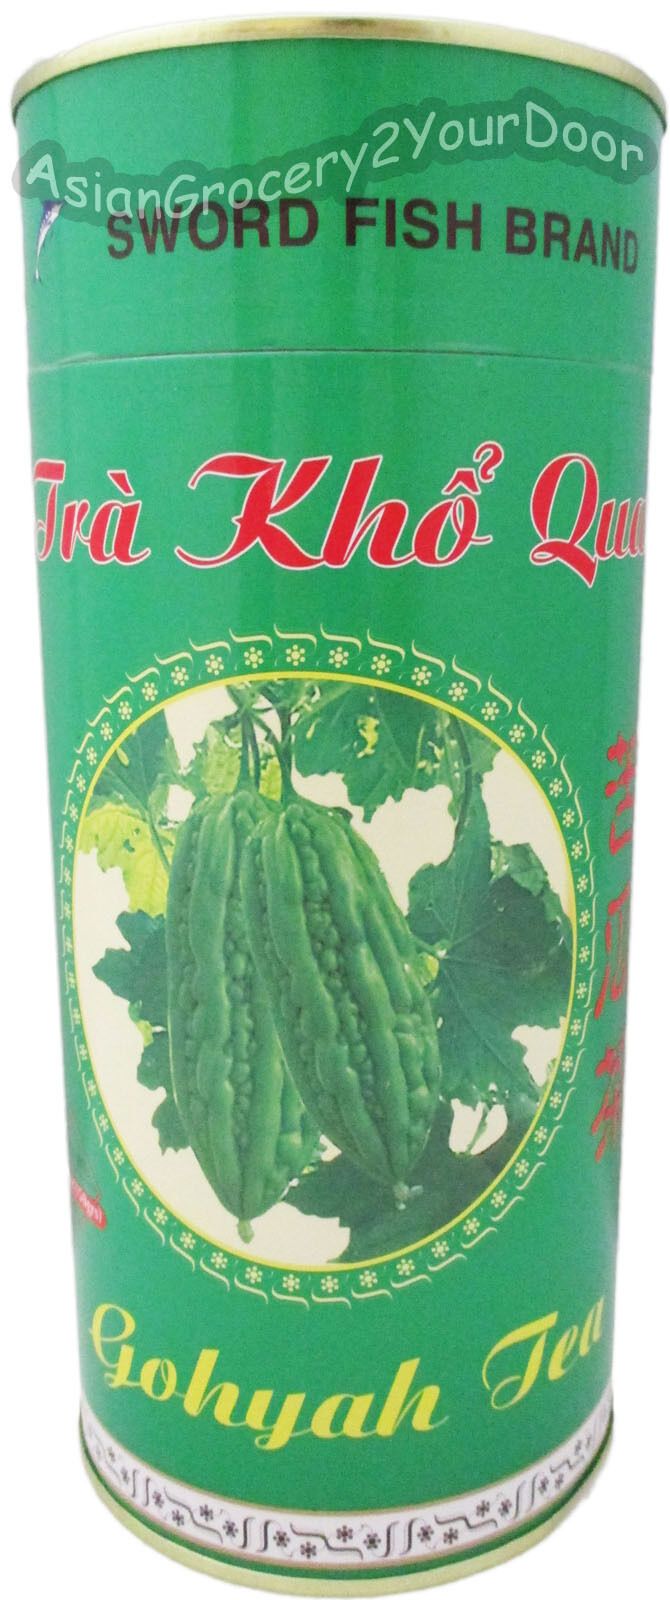 Sword Fish - Tra Kho Qua Gohyah Tea - 5.3 oz / 150.3 g - Asiangrocery2yourdoor